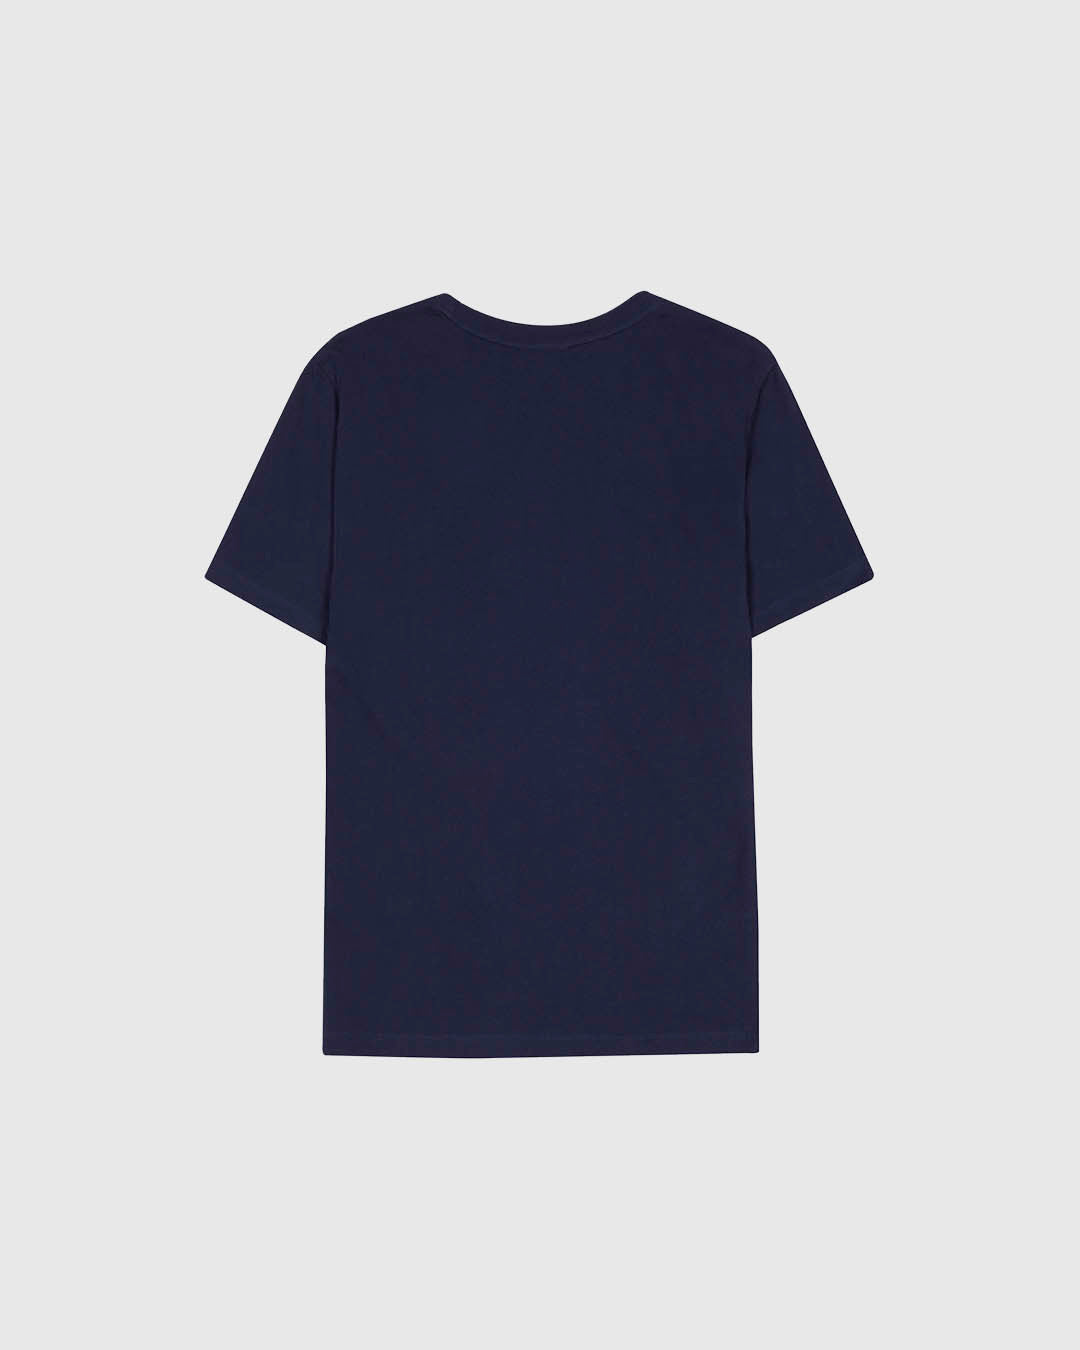 PFC: 002-1 - Women's T-Shirt - Navy